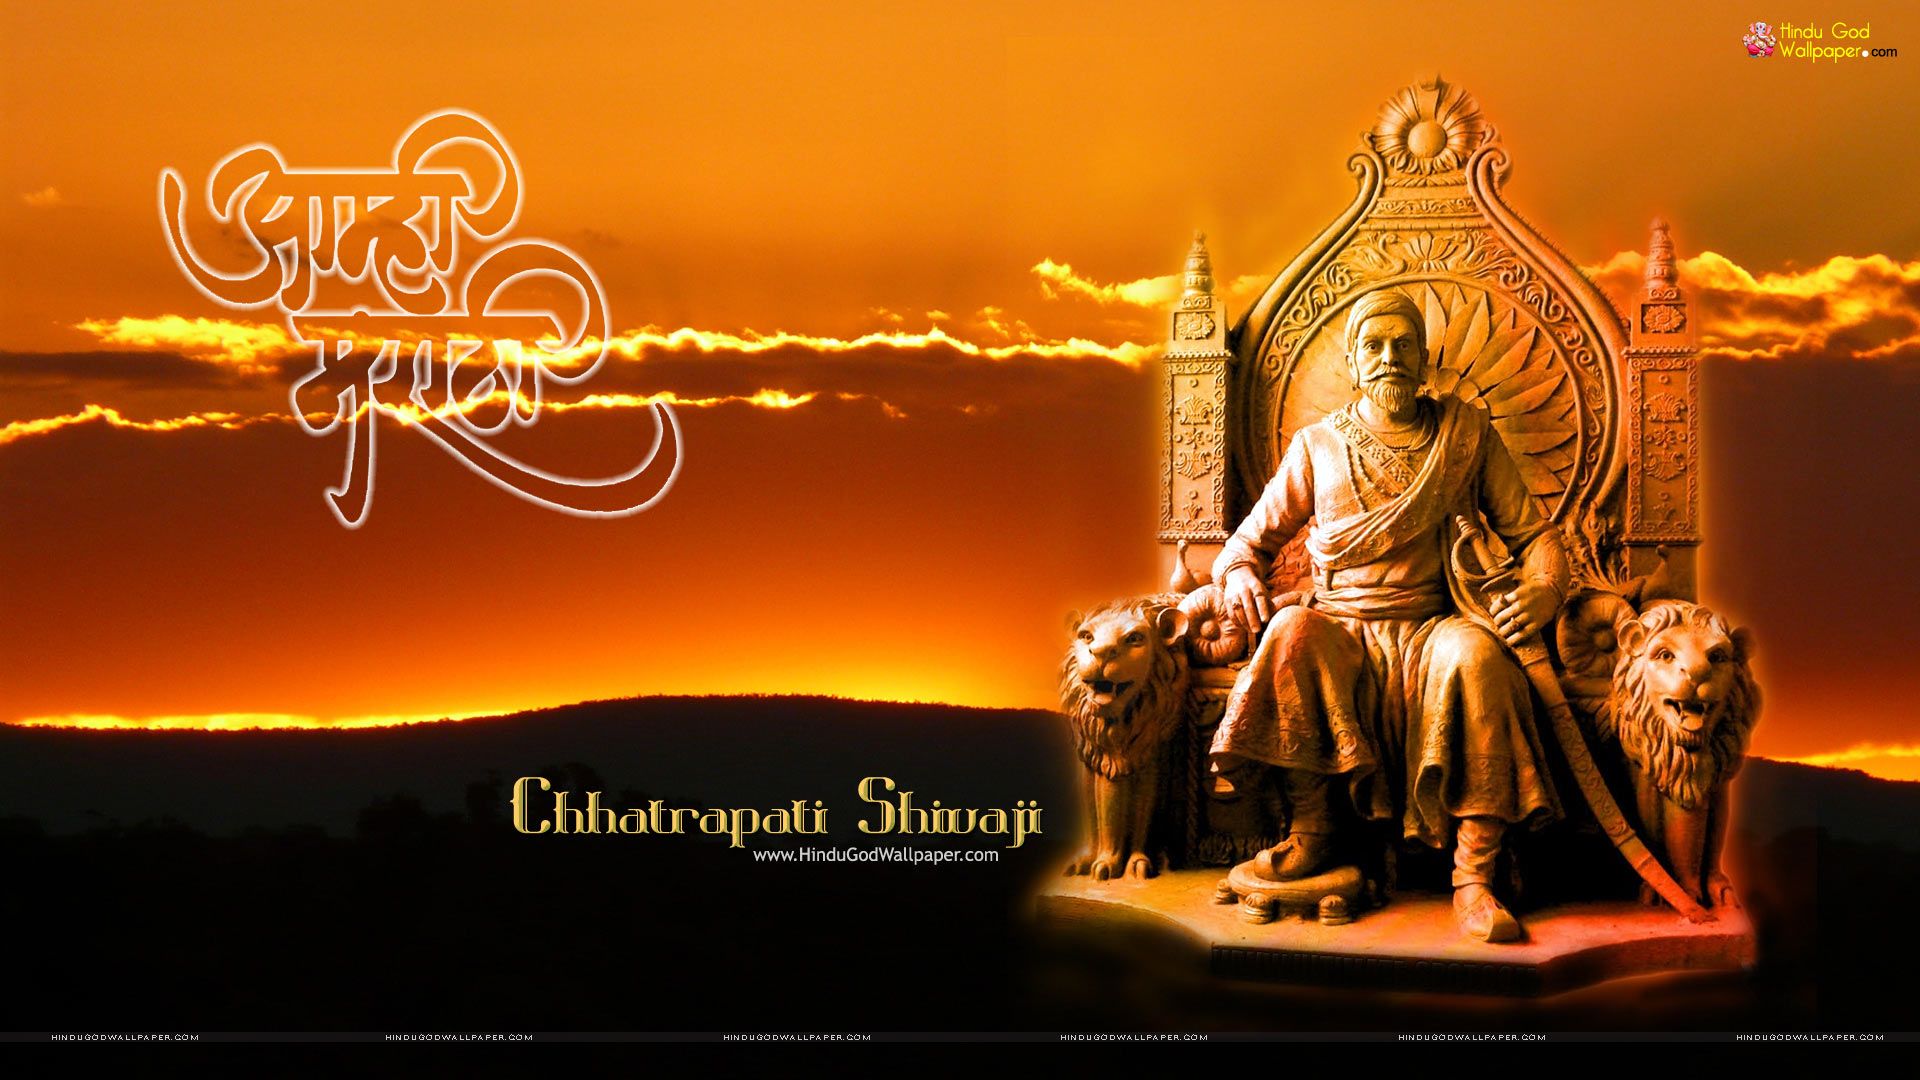 Shivaji Maharaj Wallpaper Free Shivaji Maharaj Background